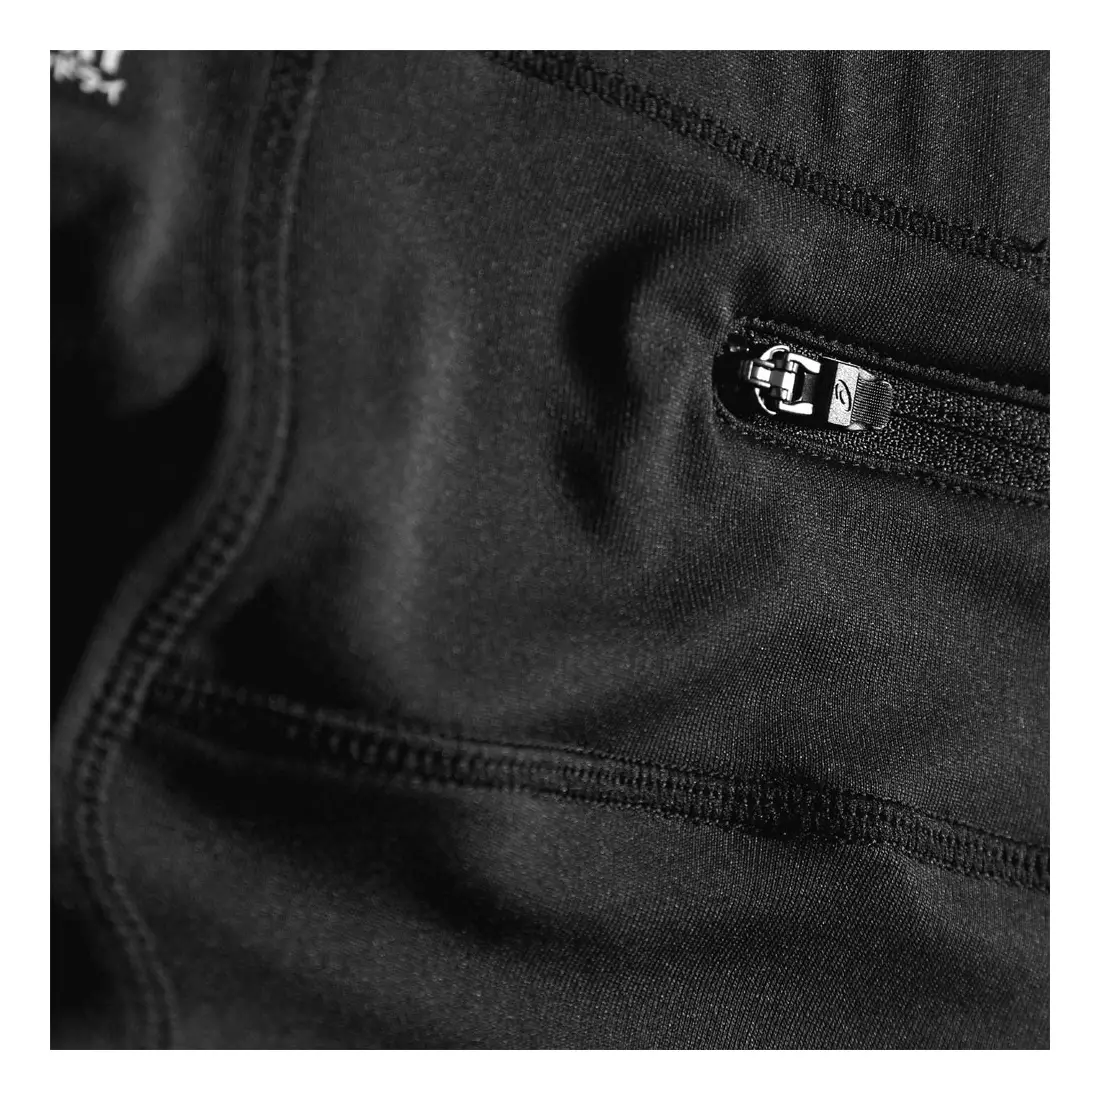 ASICS 110430-0904 - women's 3/4 KNEE TIGHT shorts, color: black